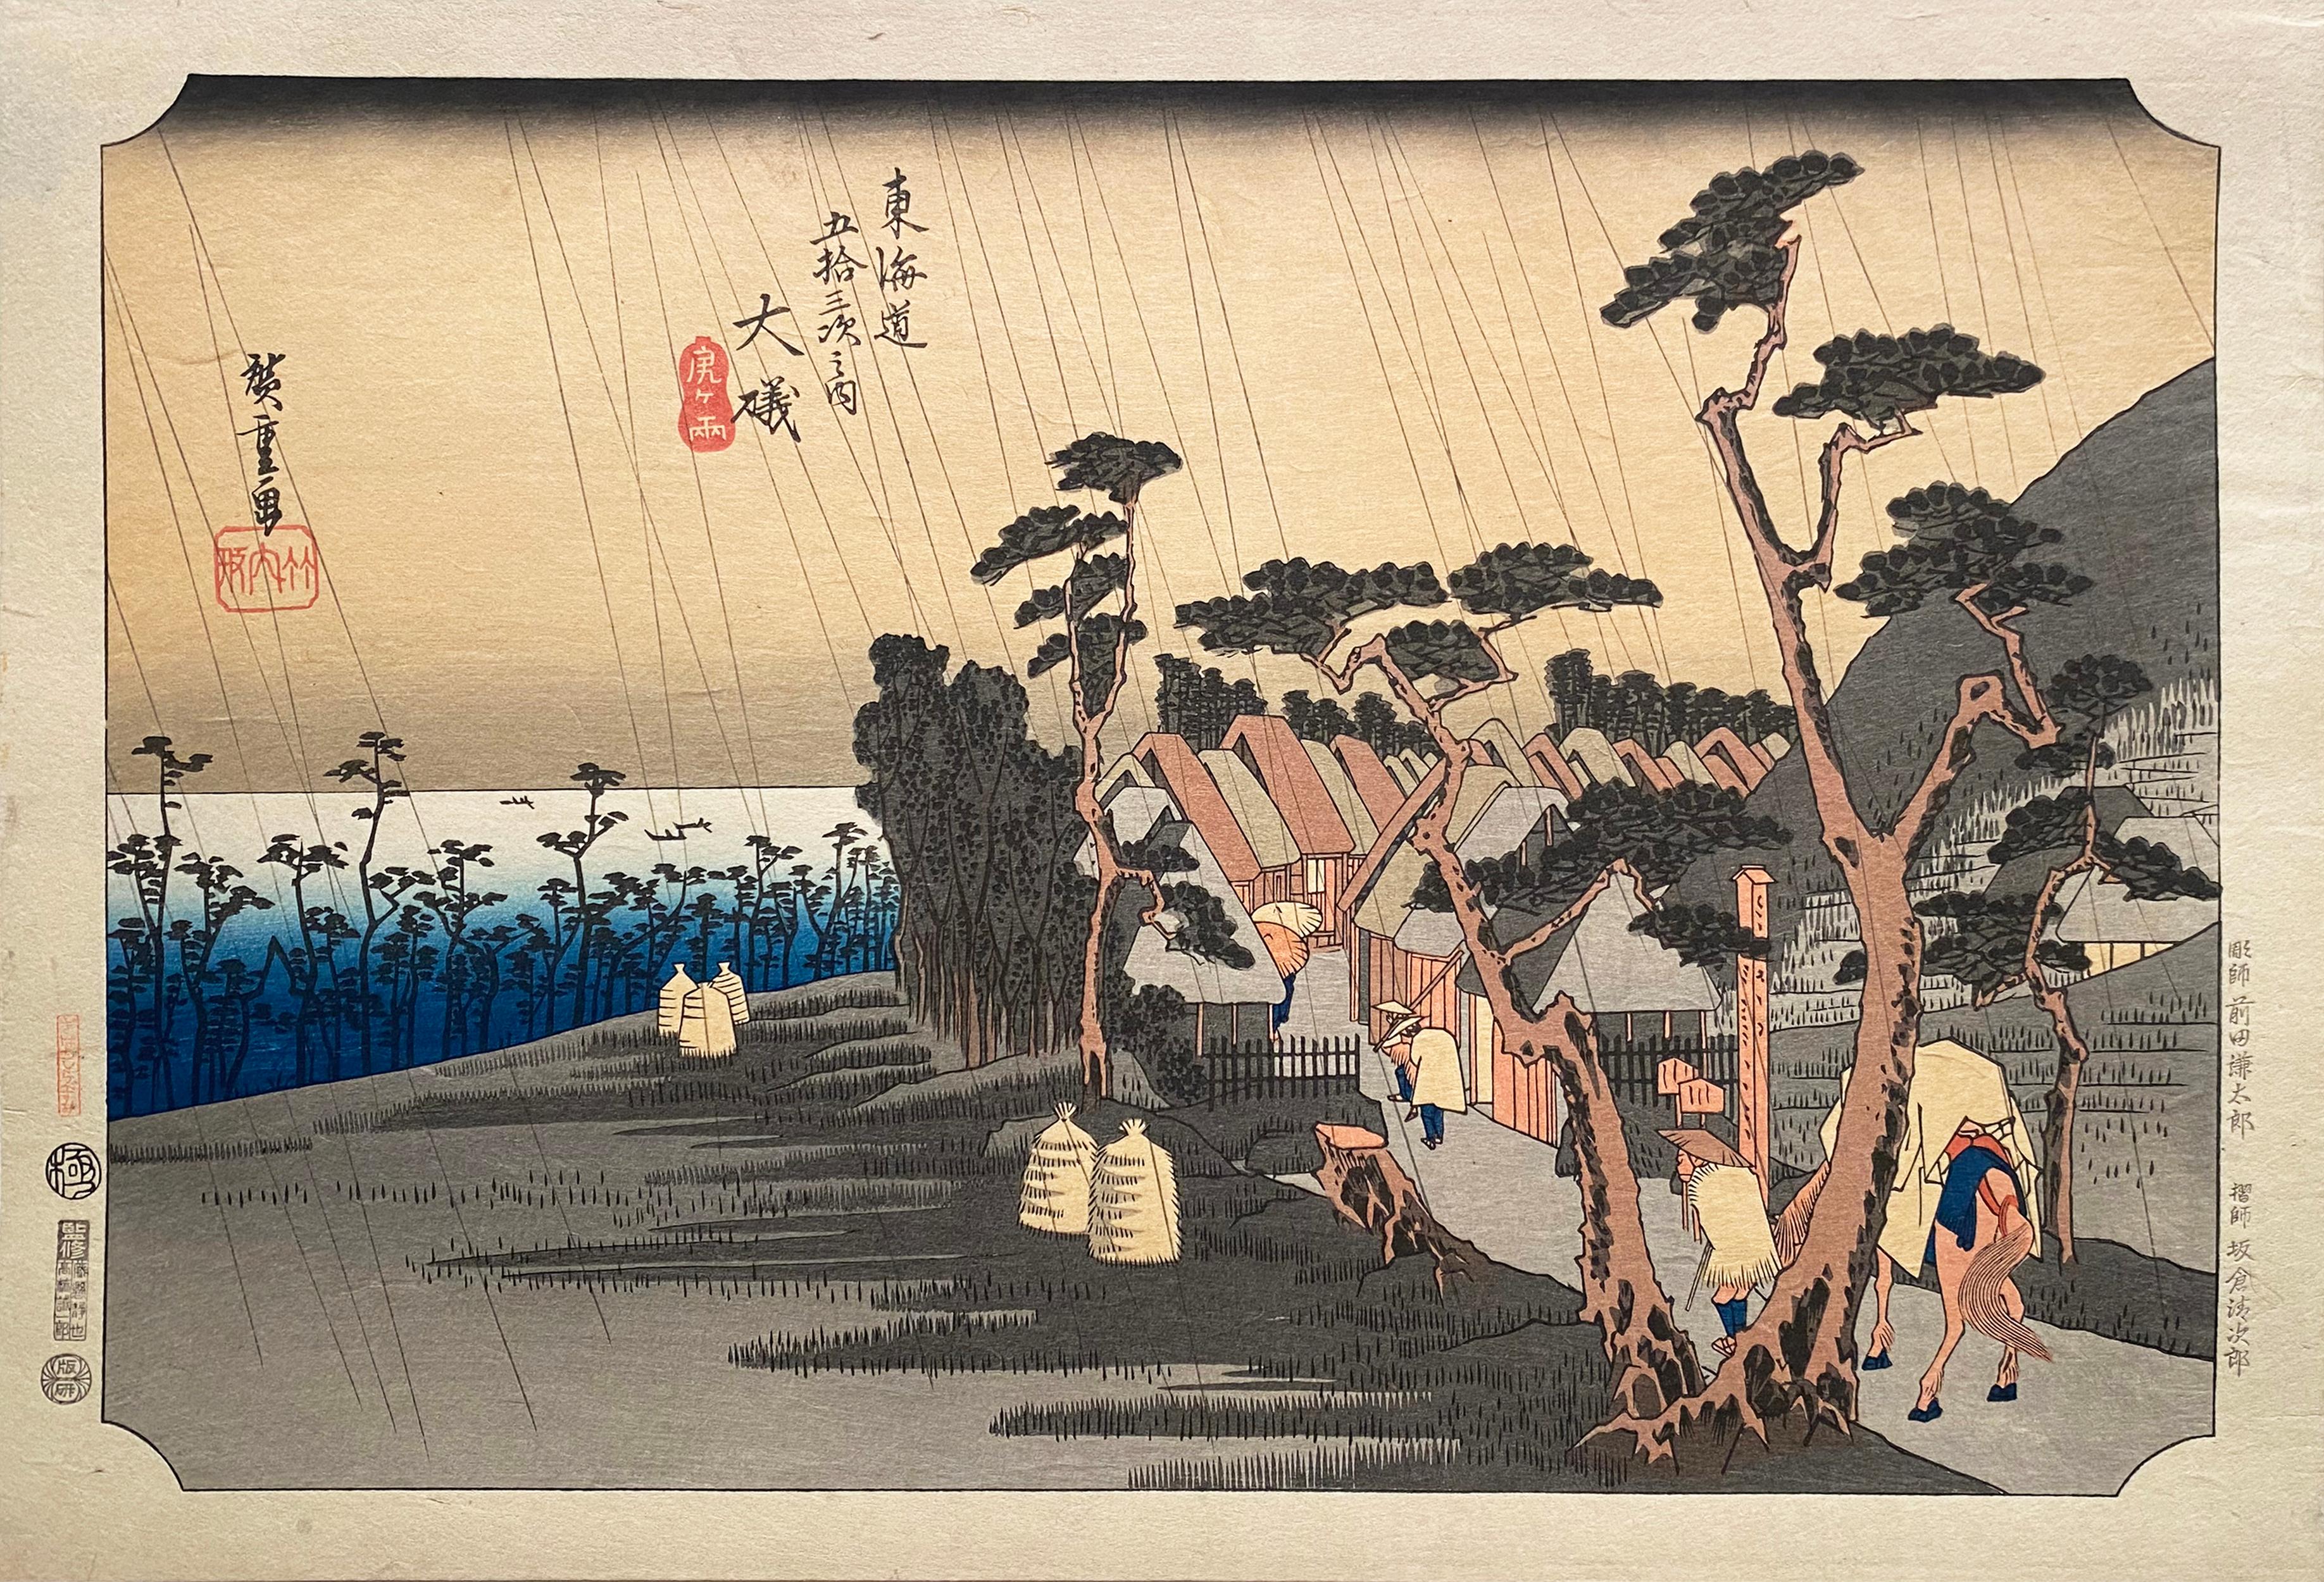 Ansicht von Ōiso", nach Utagawa Hiroshige 歌川廣重, Ukiyo-e Holzschnitt, Tokaido